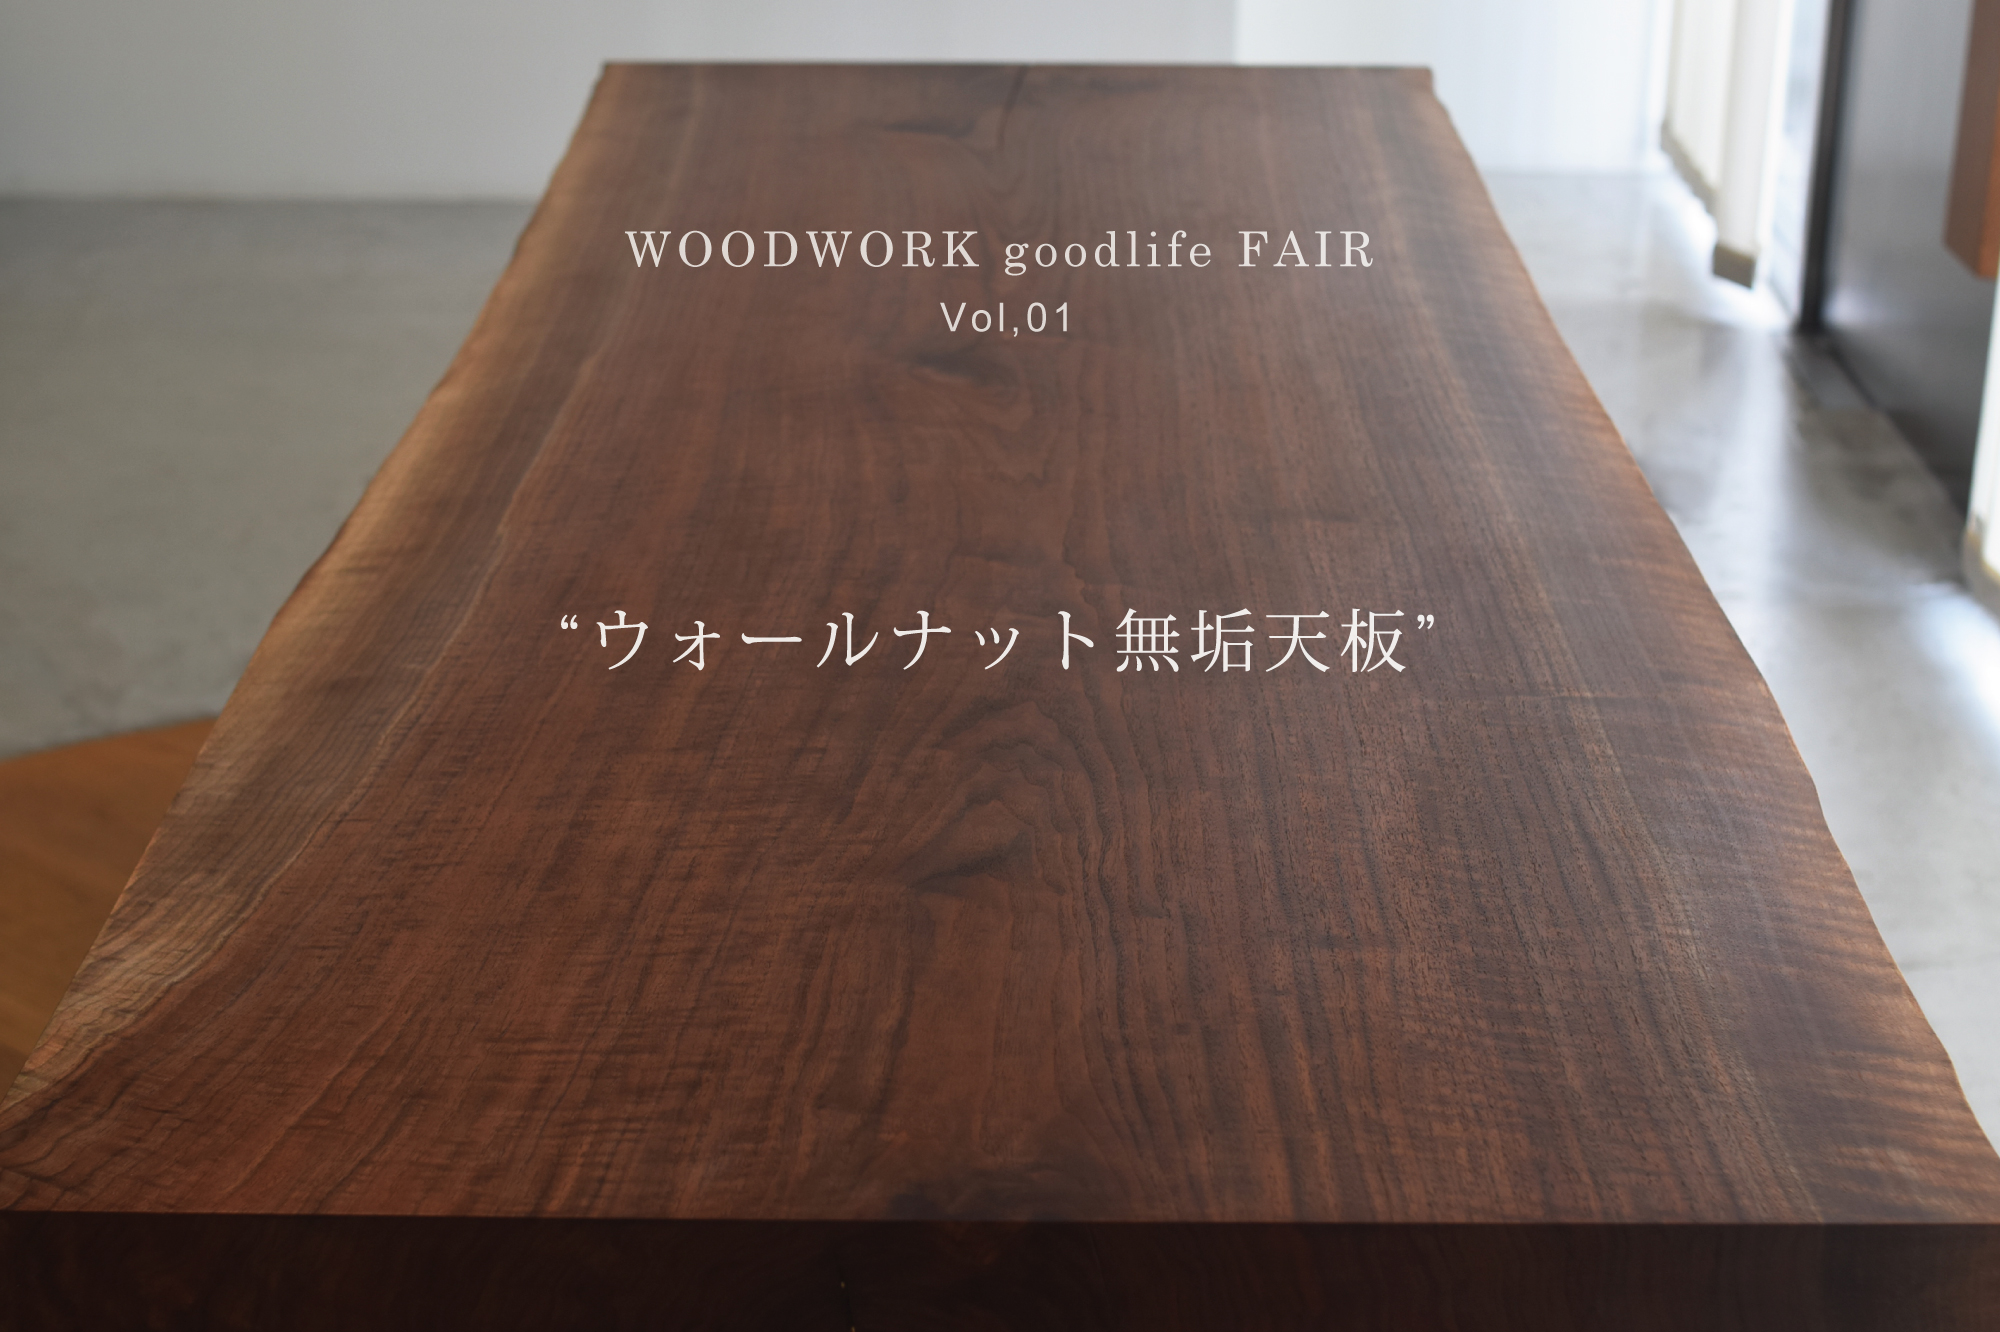 WOODWORK goodlife FAIR Vol,01 “ウォールナット無垢天板”│オーダー 